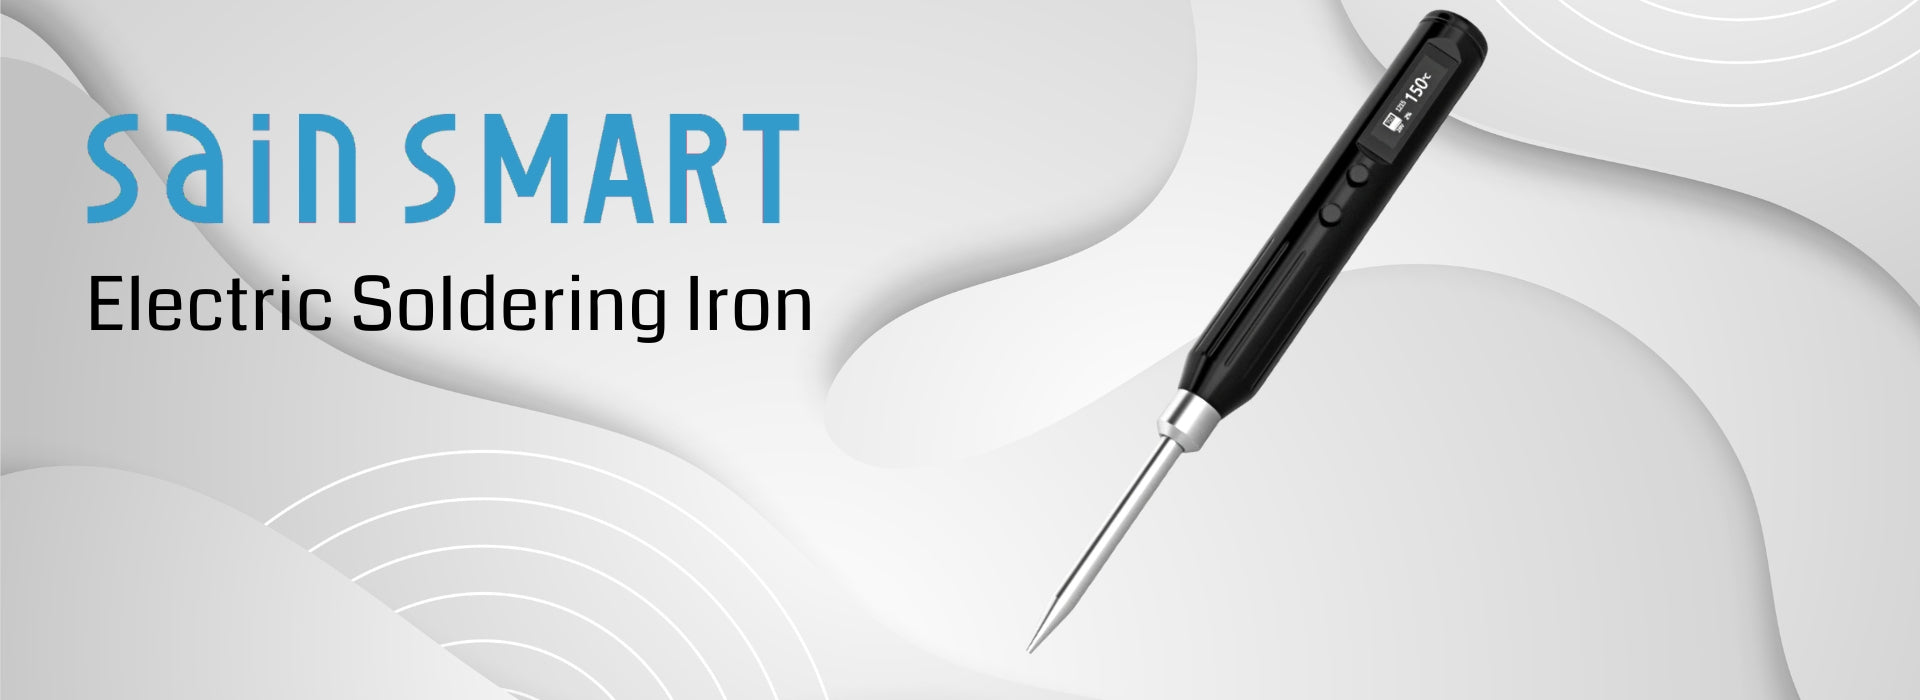 PSI65 65W Smart Soldering Iron | SainSmart